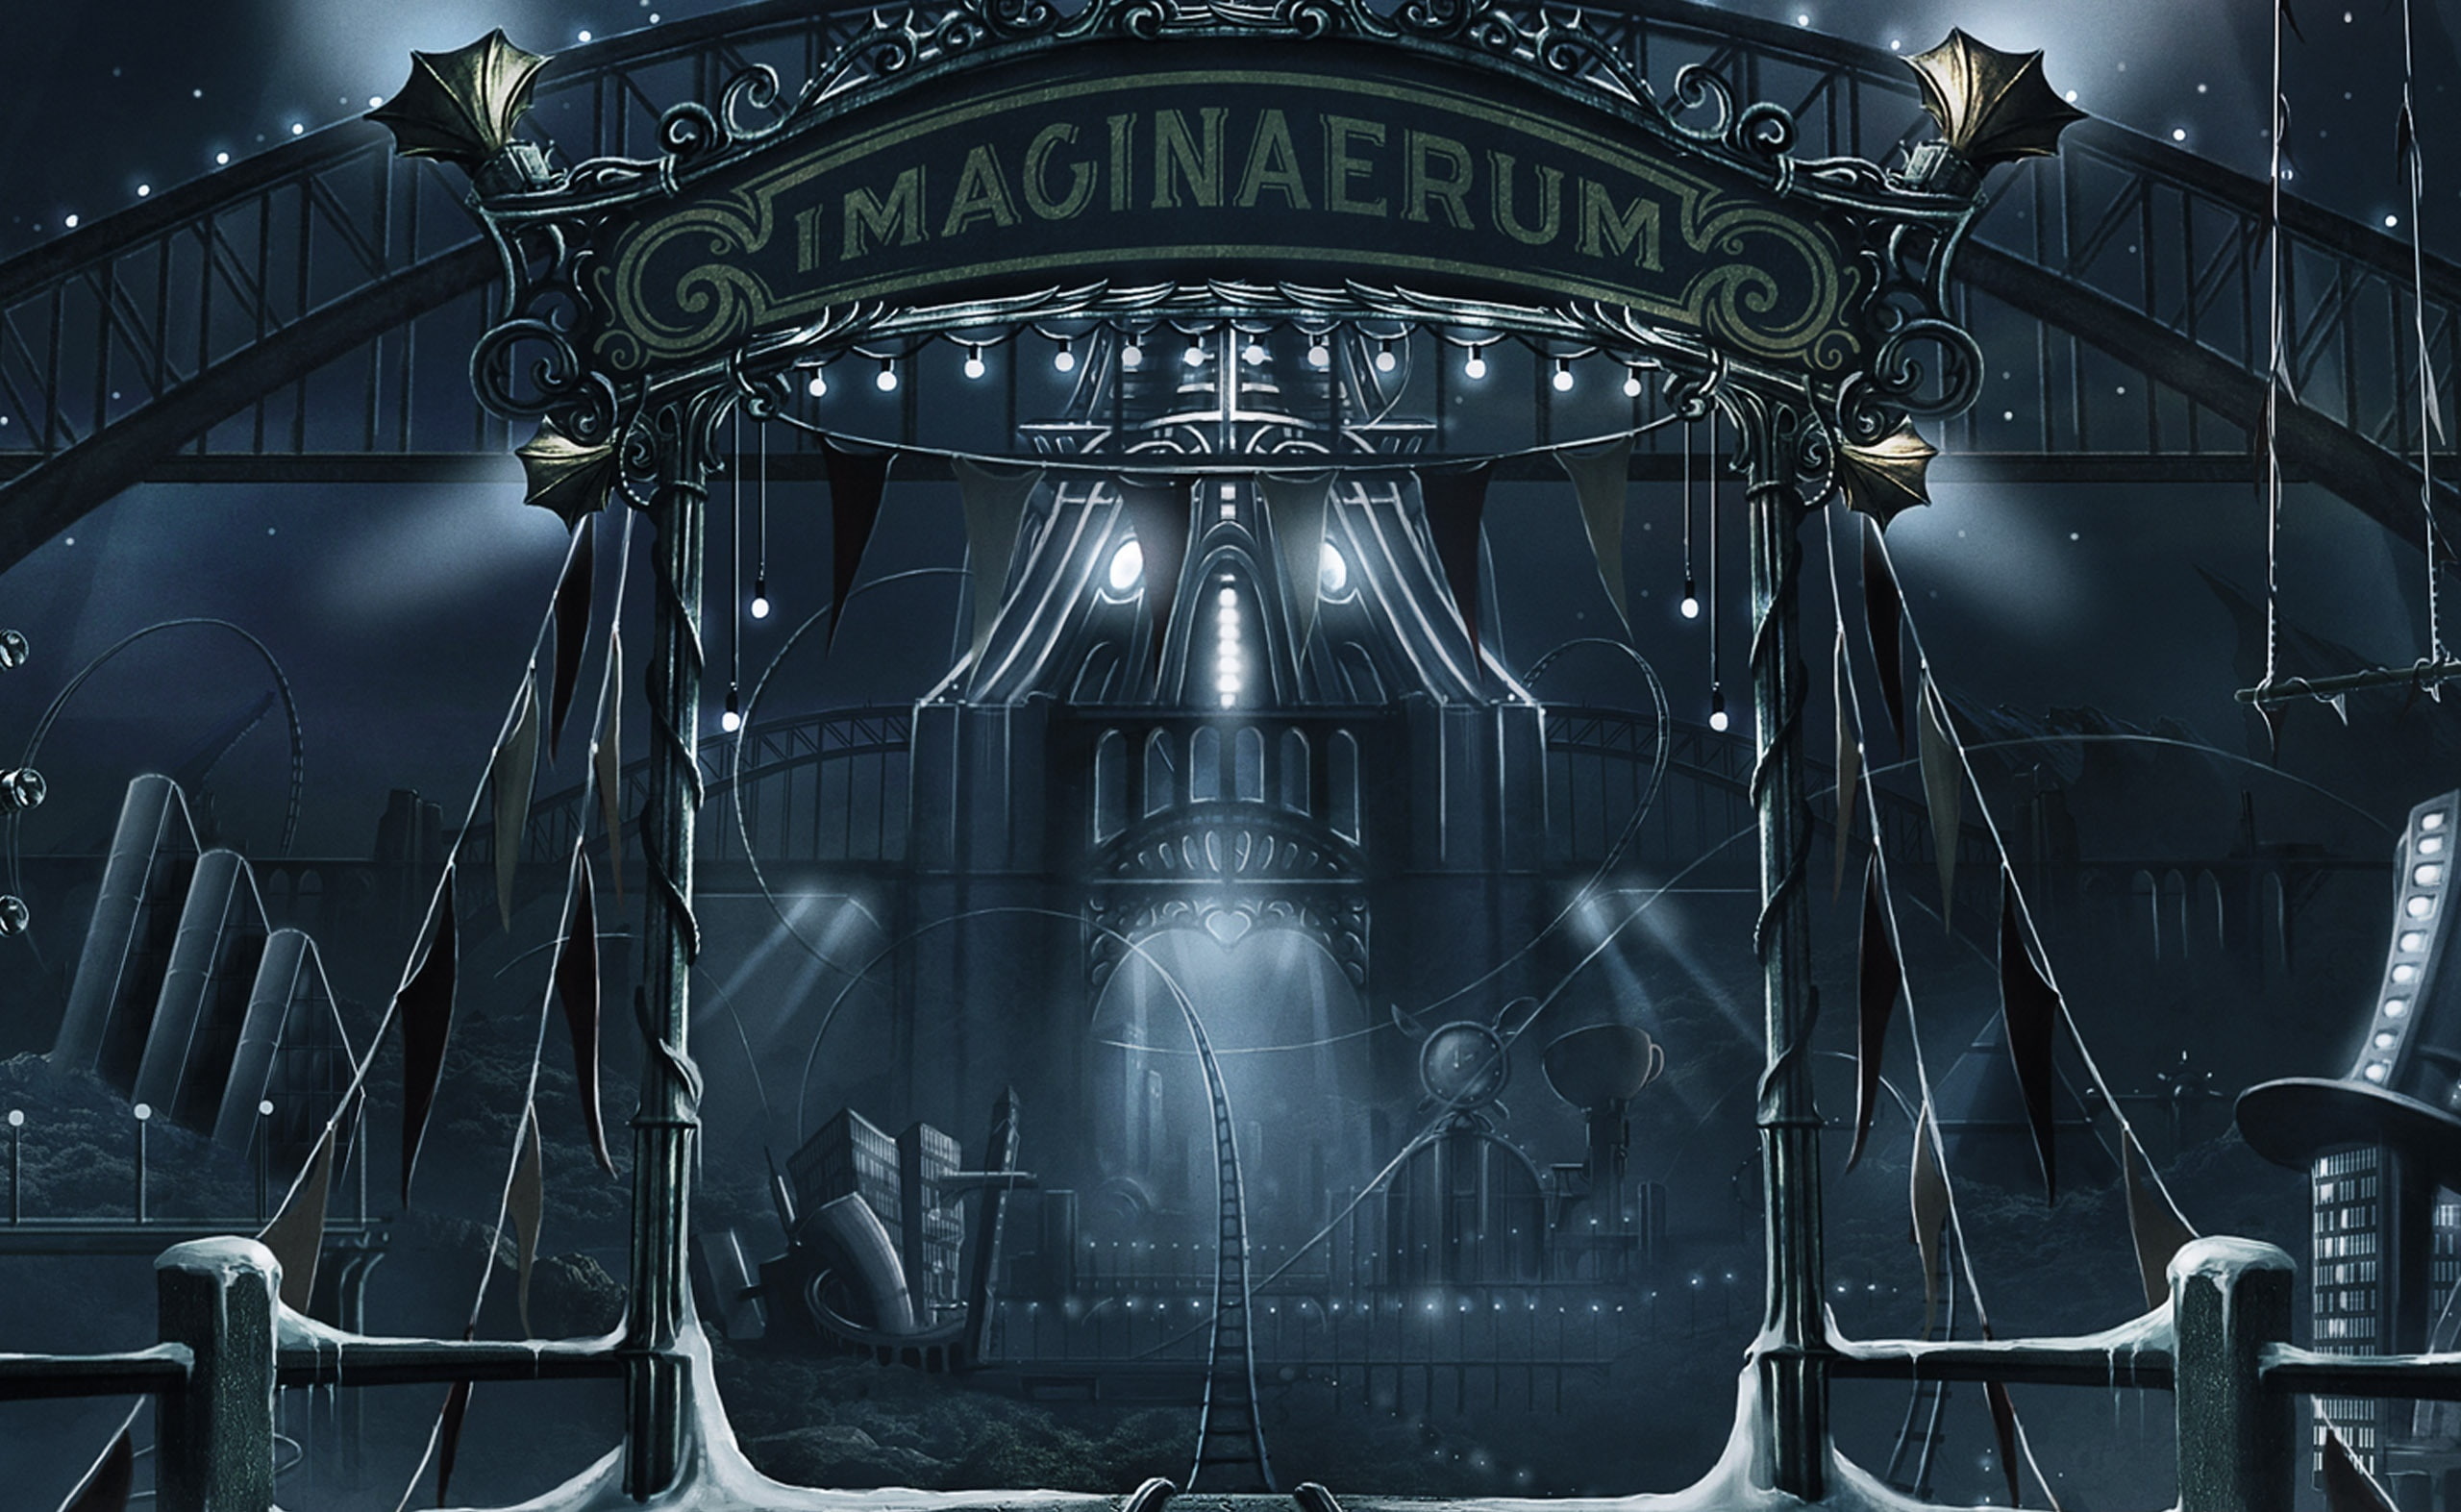 Imaginaerum - Nightwish HD Wallpaper, Imagenaerium carnival wallpaper